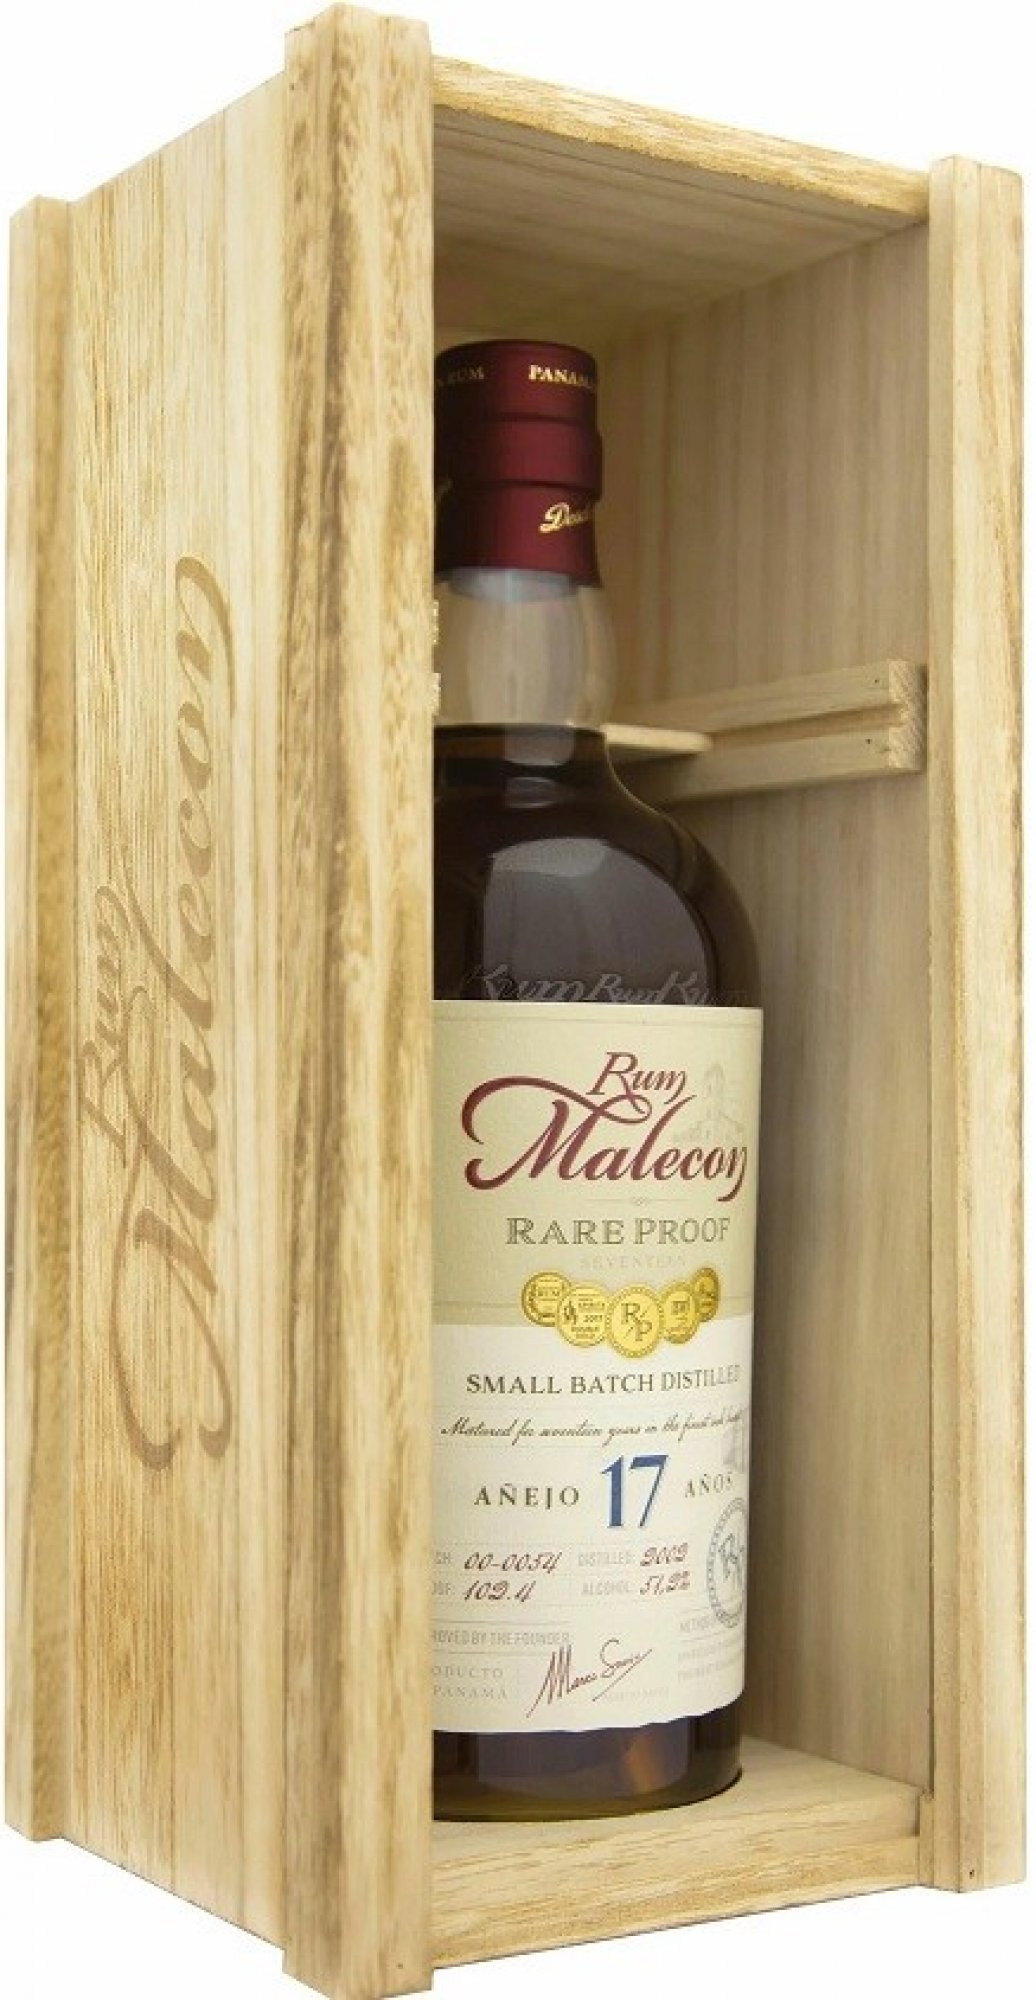 Malecon Rare proof 2002 17yo Panamas rum 51,2% 0,7l